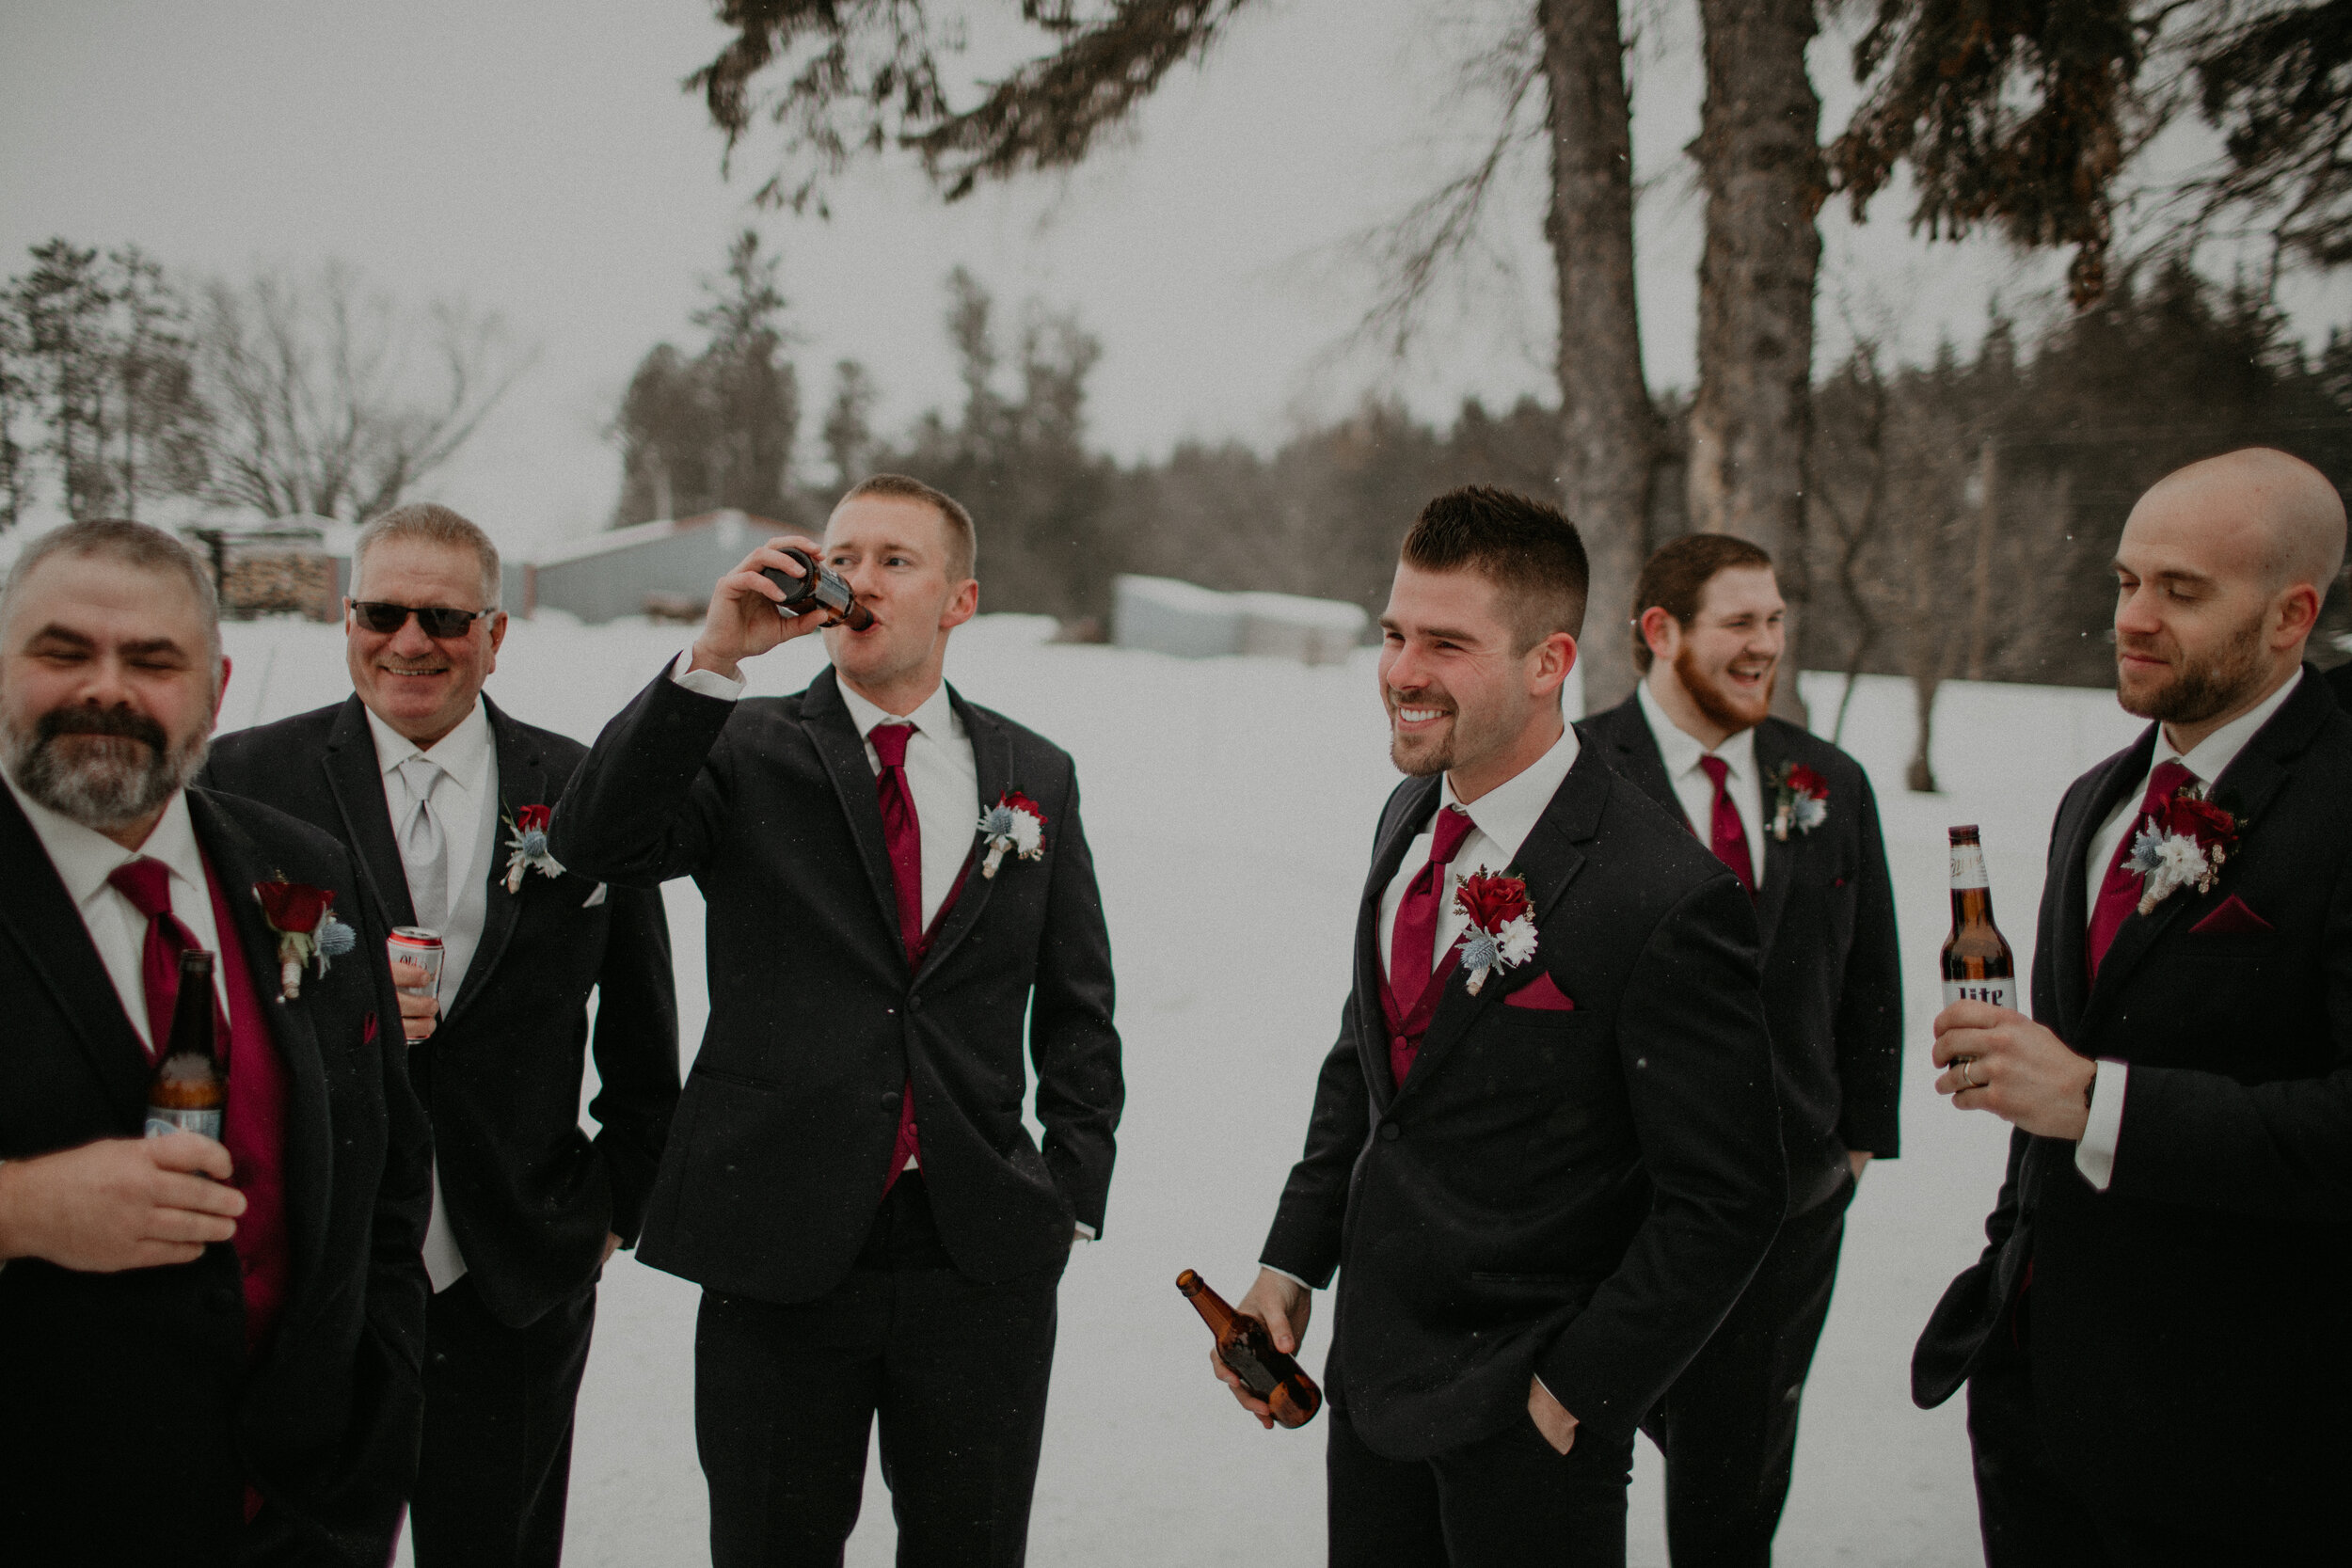  Andrea Wanger Photography cozy winter Wisconsin wedding. Perfect Wisconsin wedding in February. Elegant winter wedding groom and groomsmen. 